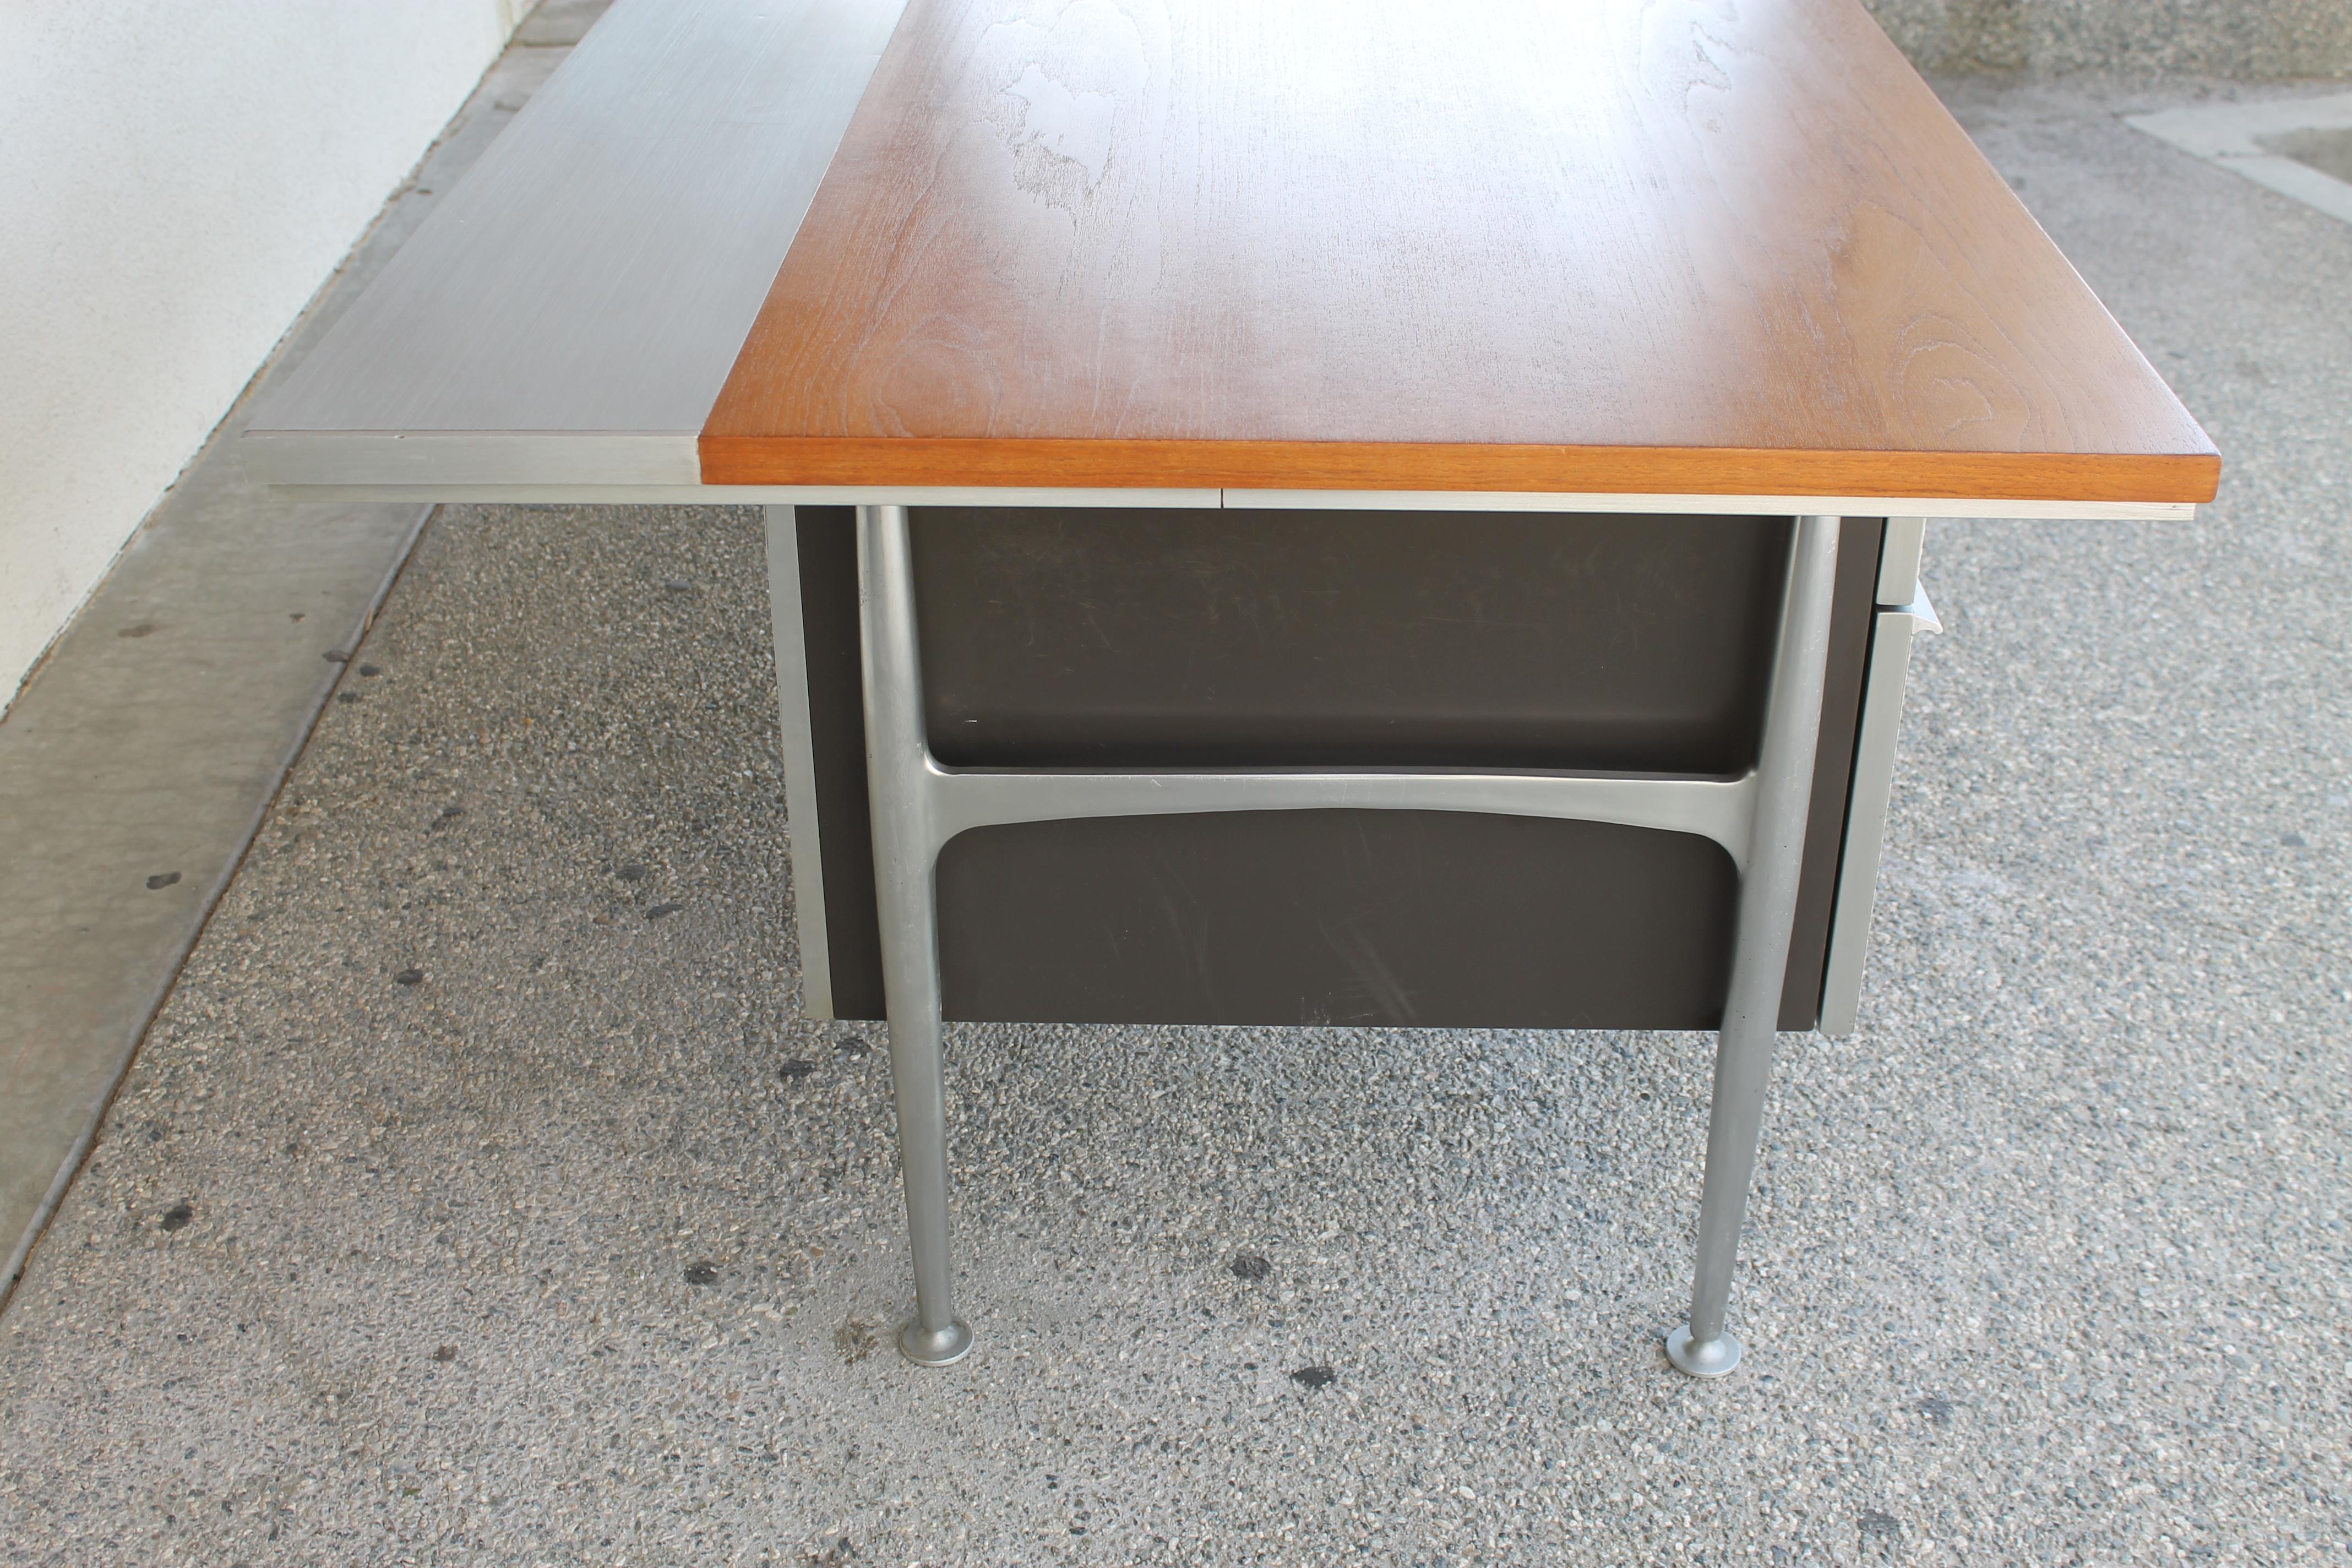 Welton Becket Aluminum and Wood Desk for Kaiser Aluminum 1